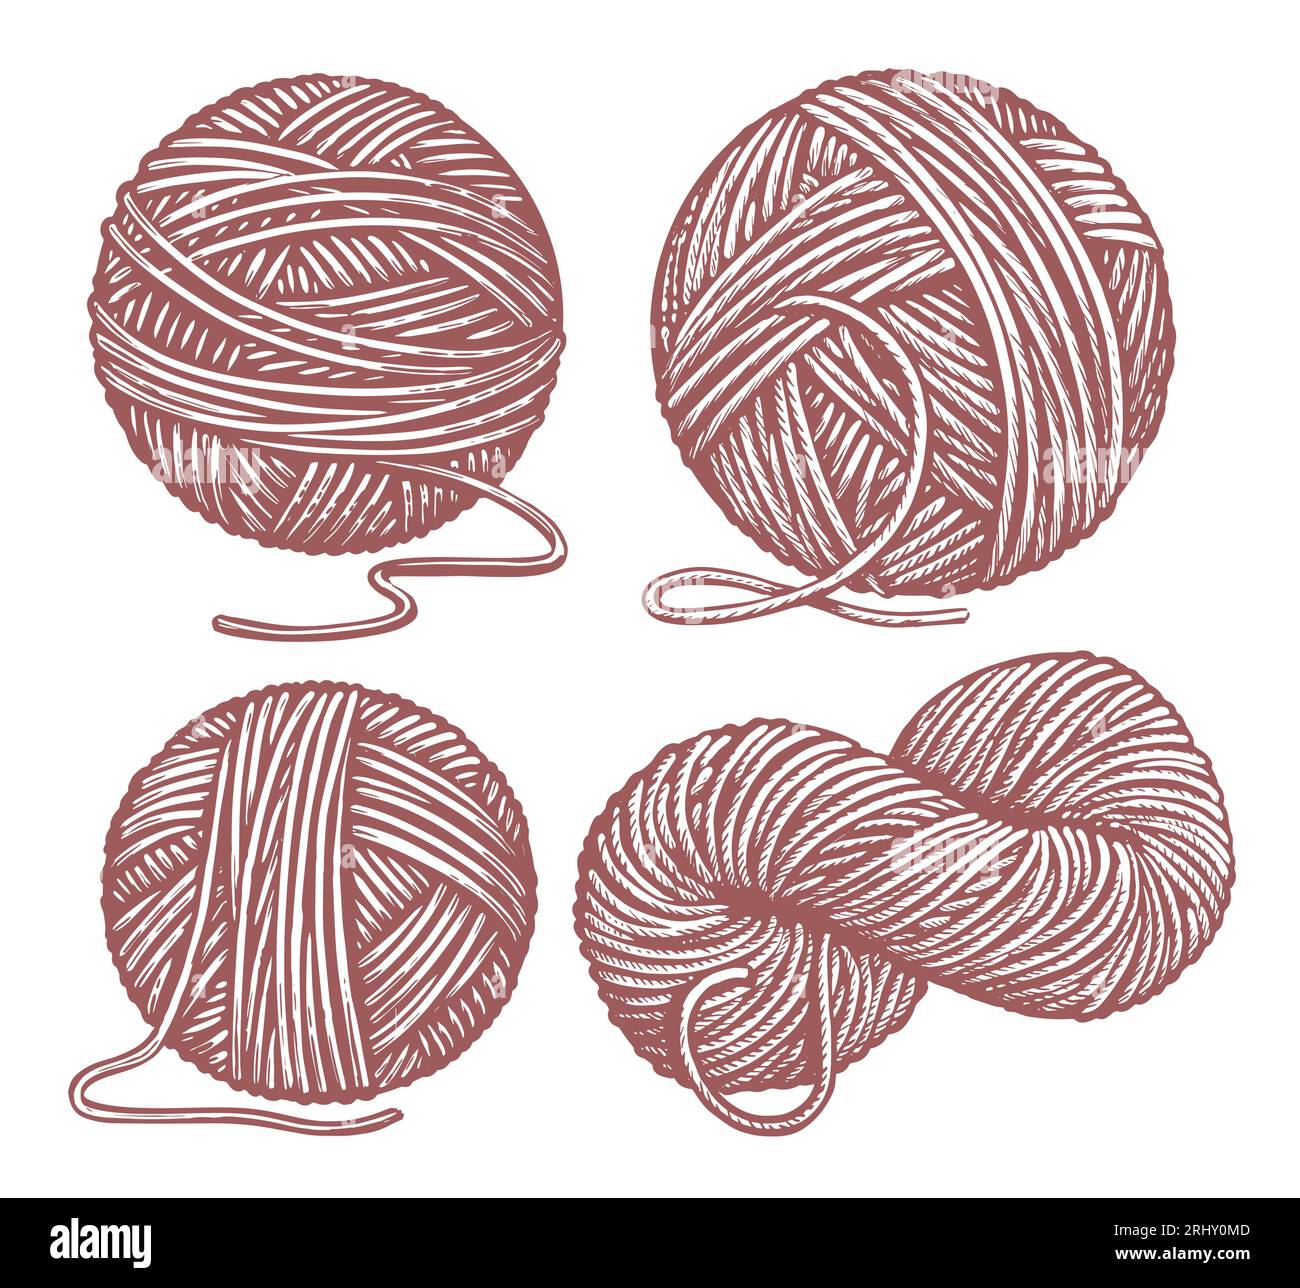 yarn illustration